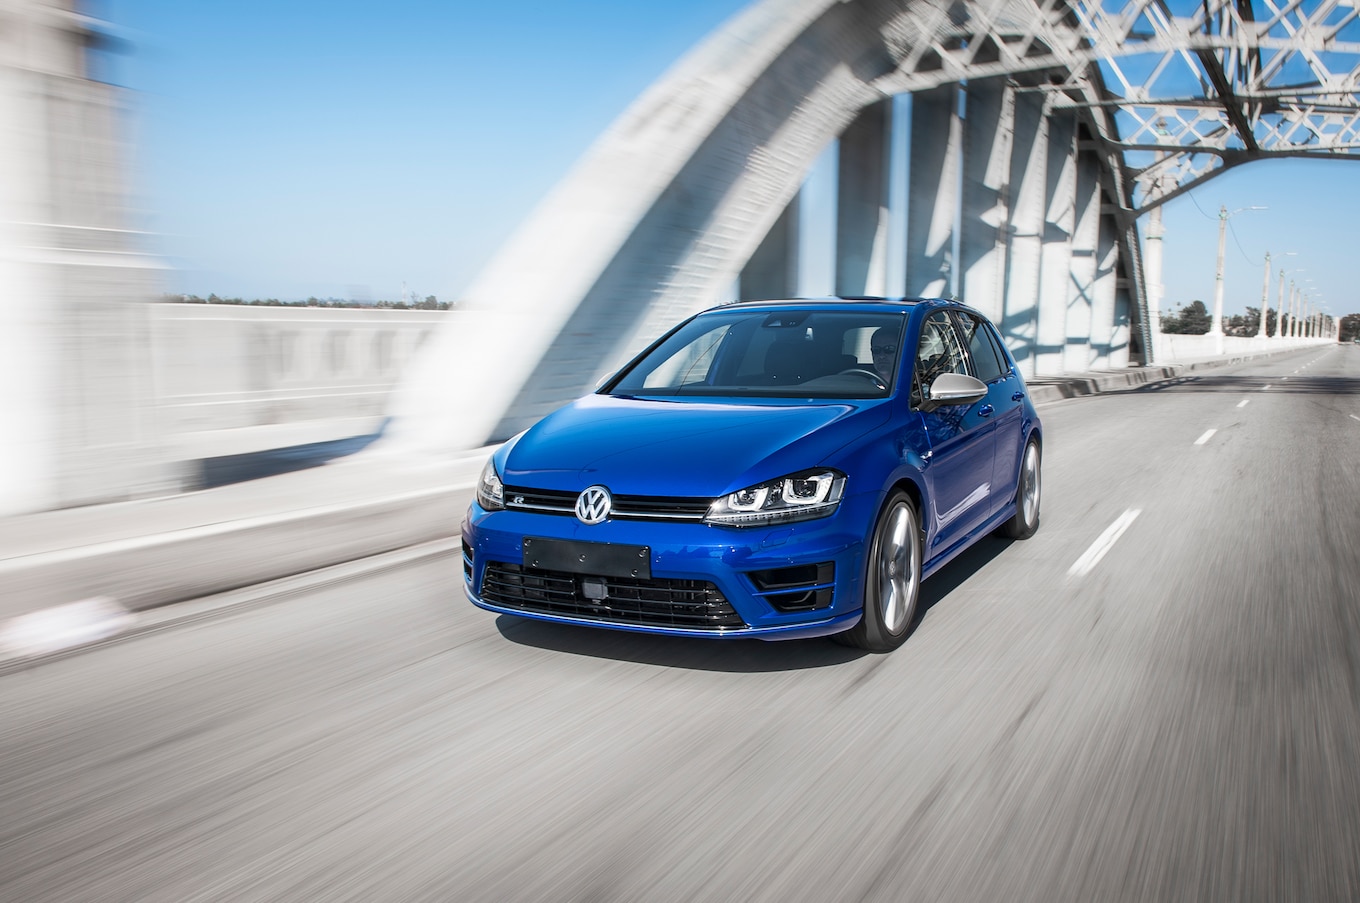 2015-Volkswagen-Golf-R-Euro-Spec-promo1